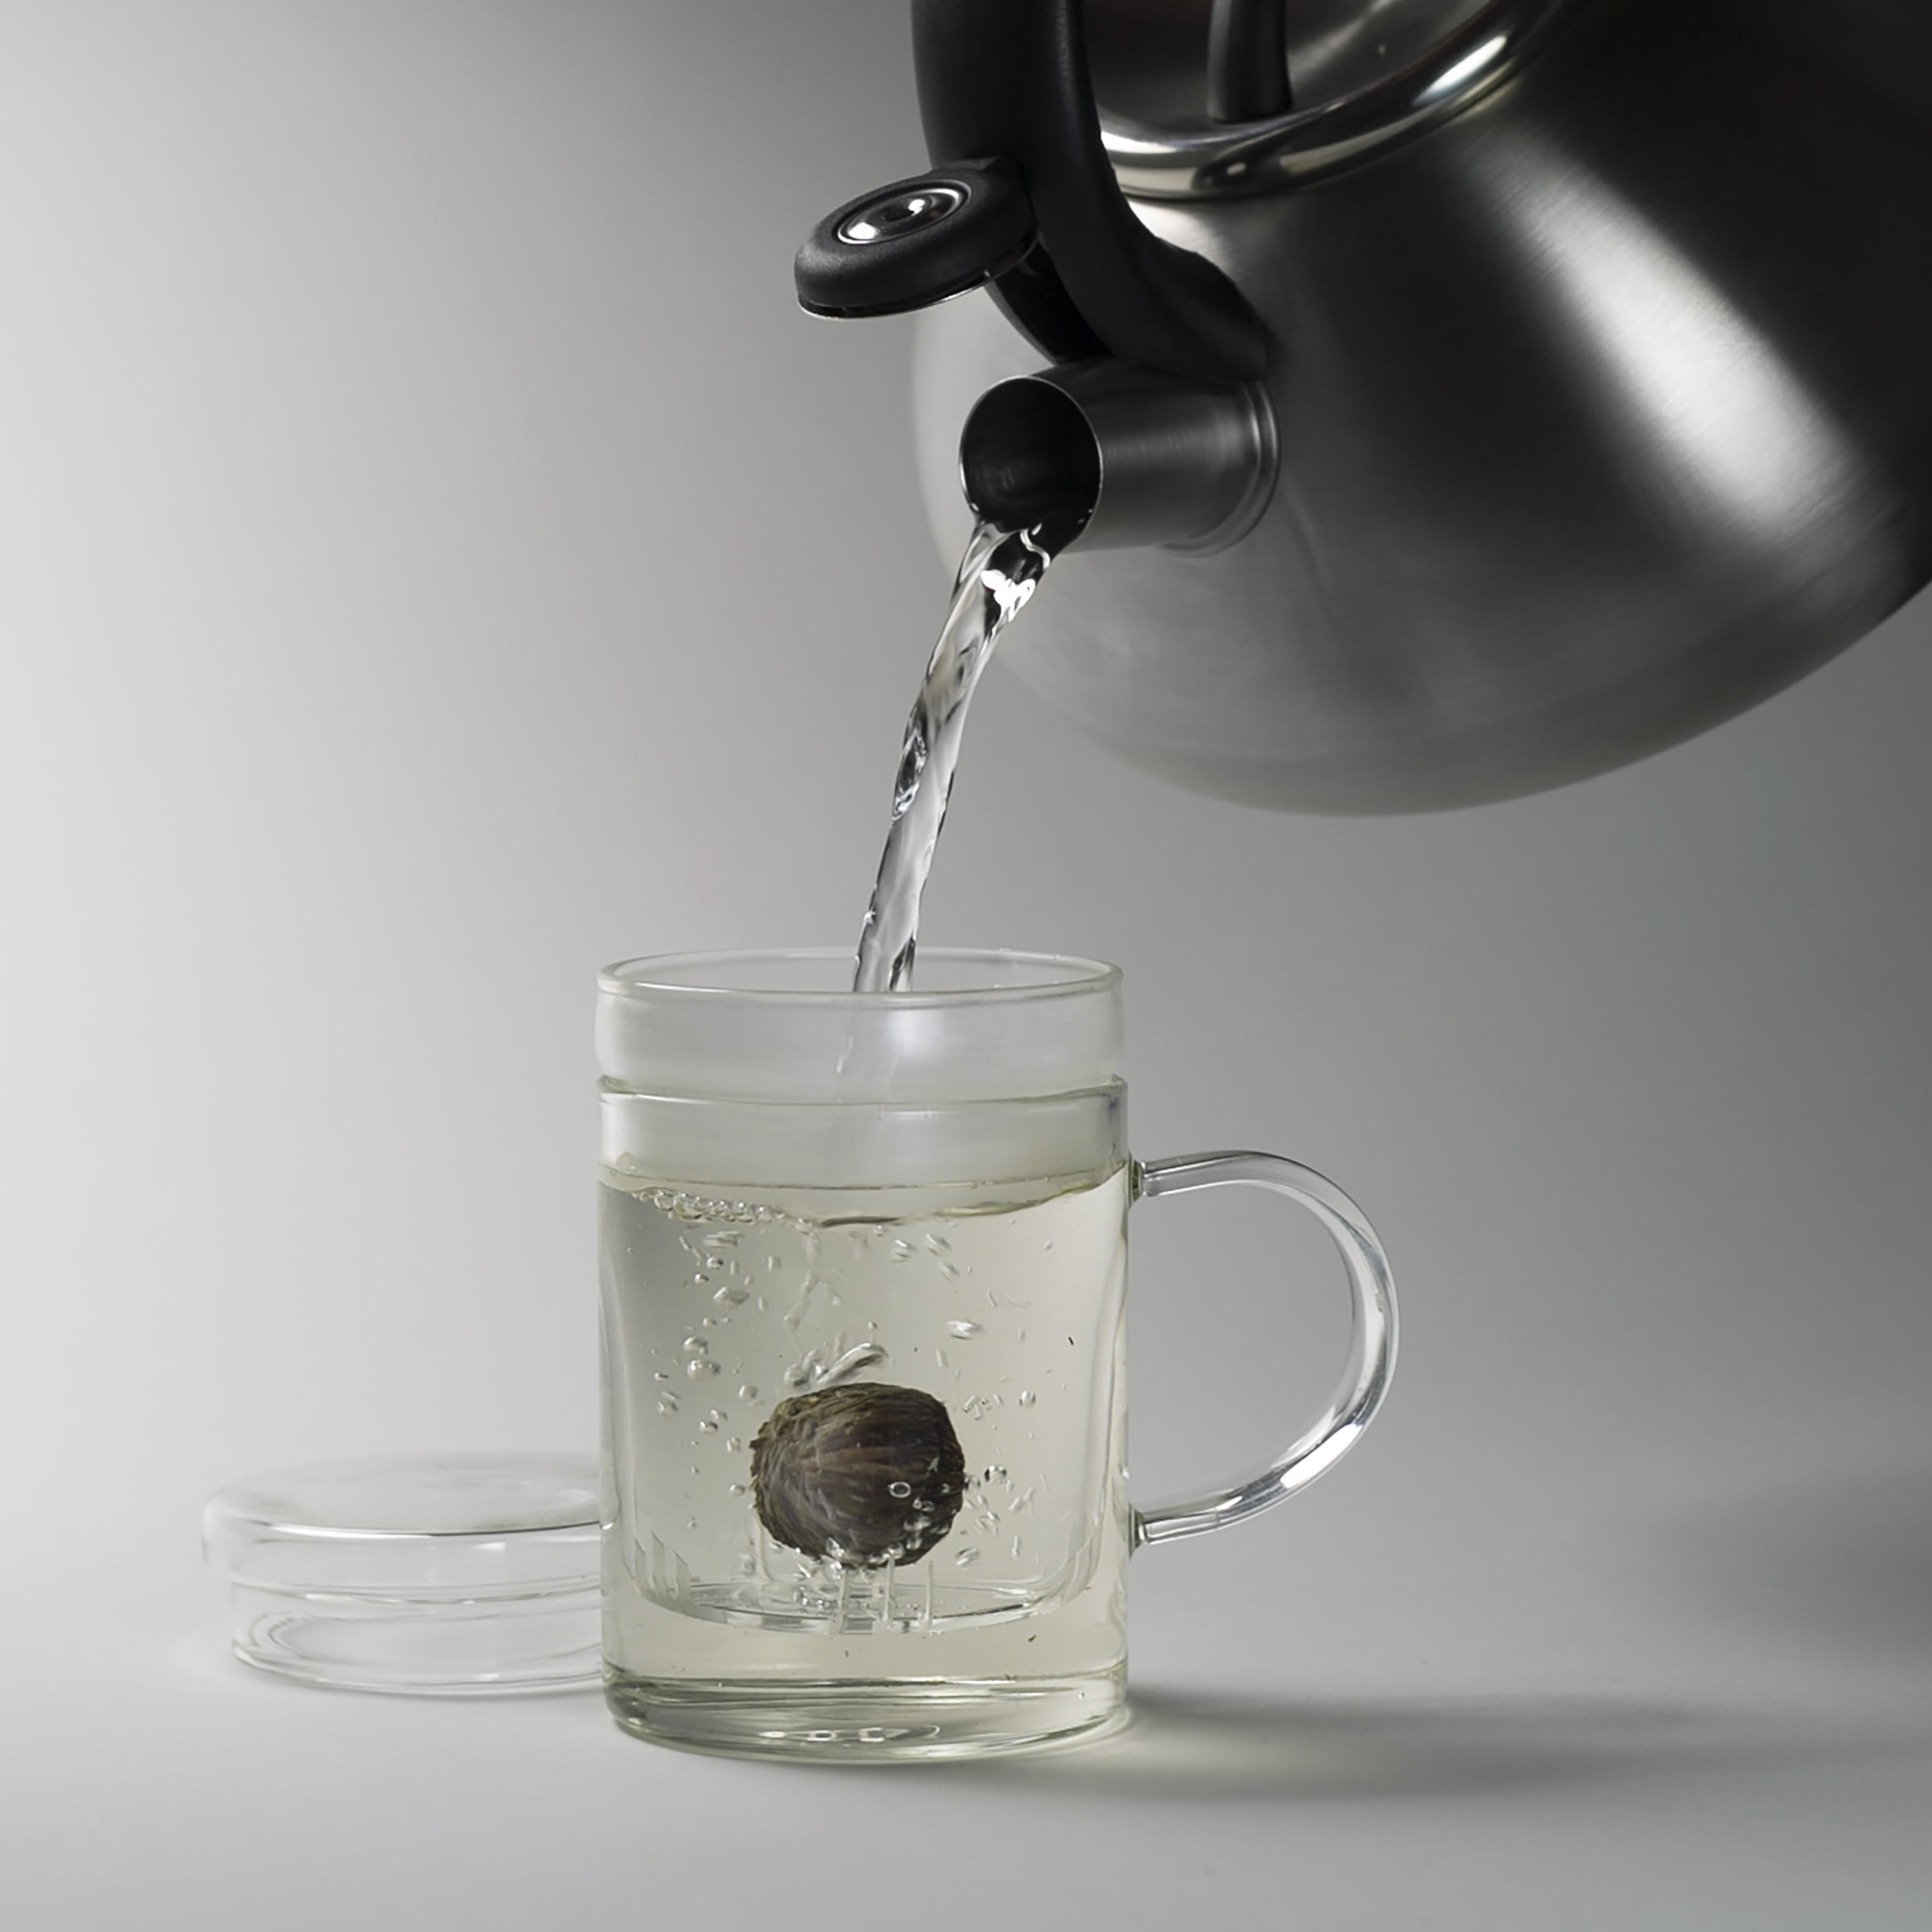 Primula Double Wall Glass Mug and Tea Bag Buddy – Temperature Safe 16 oz.  Clear Glass Mug – 100% Foo…See more Primula Double Wall Glass Mug and Tea